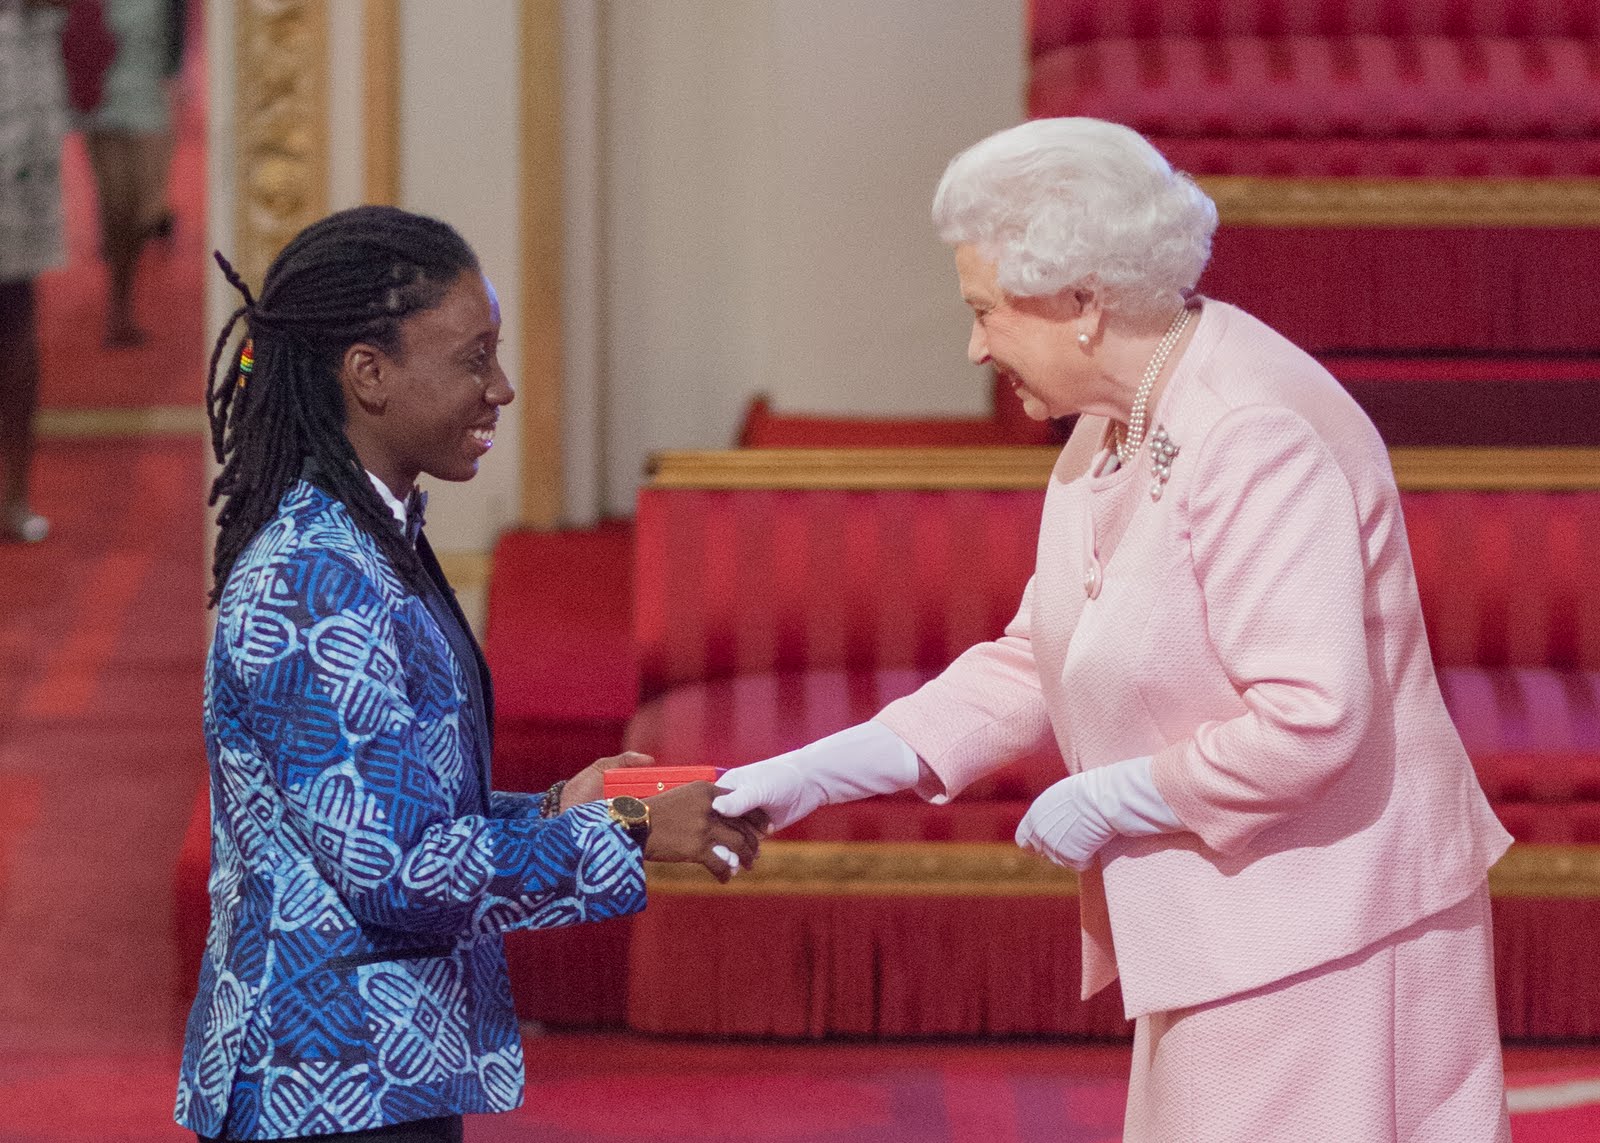 Donnya Piggott 2015 Queen's Young Leader from Barbados